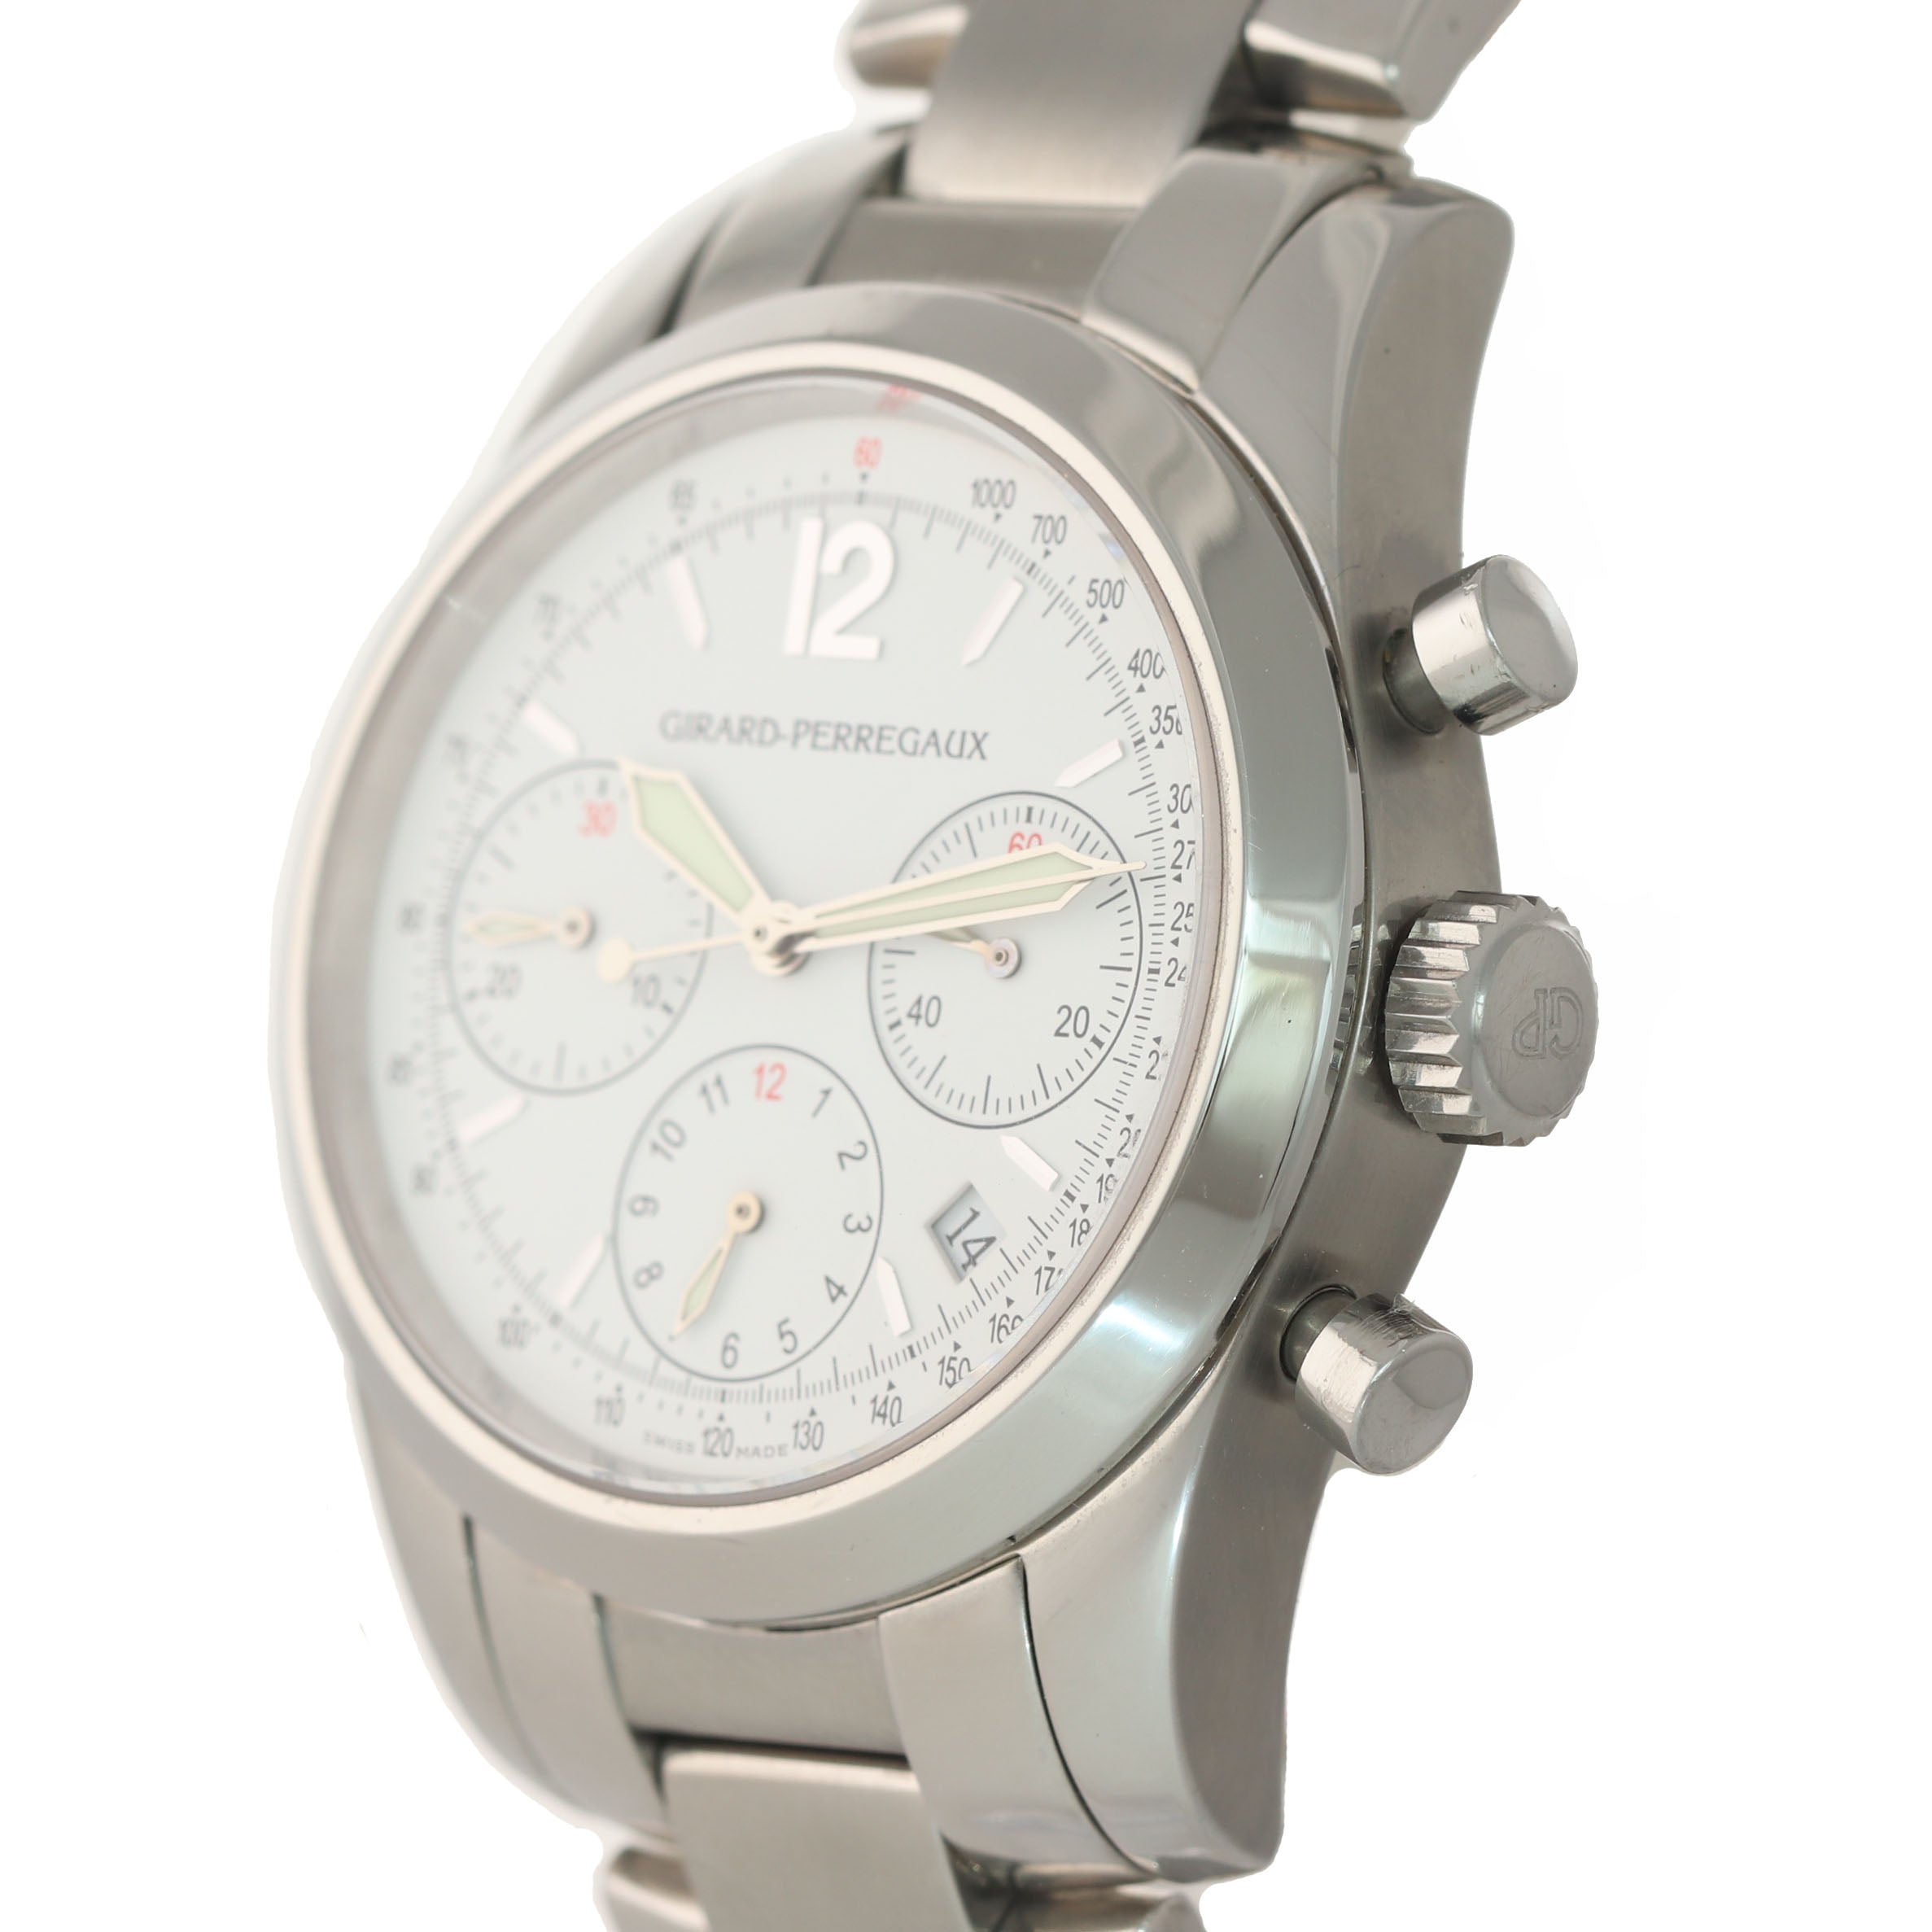 Girard Perregaux Sport Automatic Chronograph 4956 40mm White Steel Date Watch